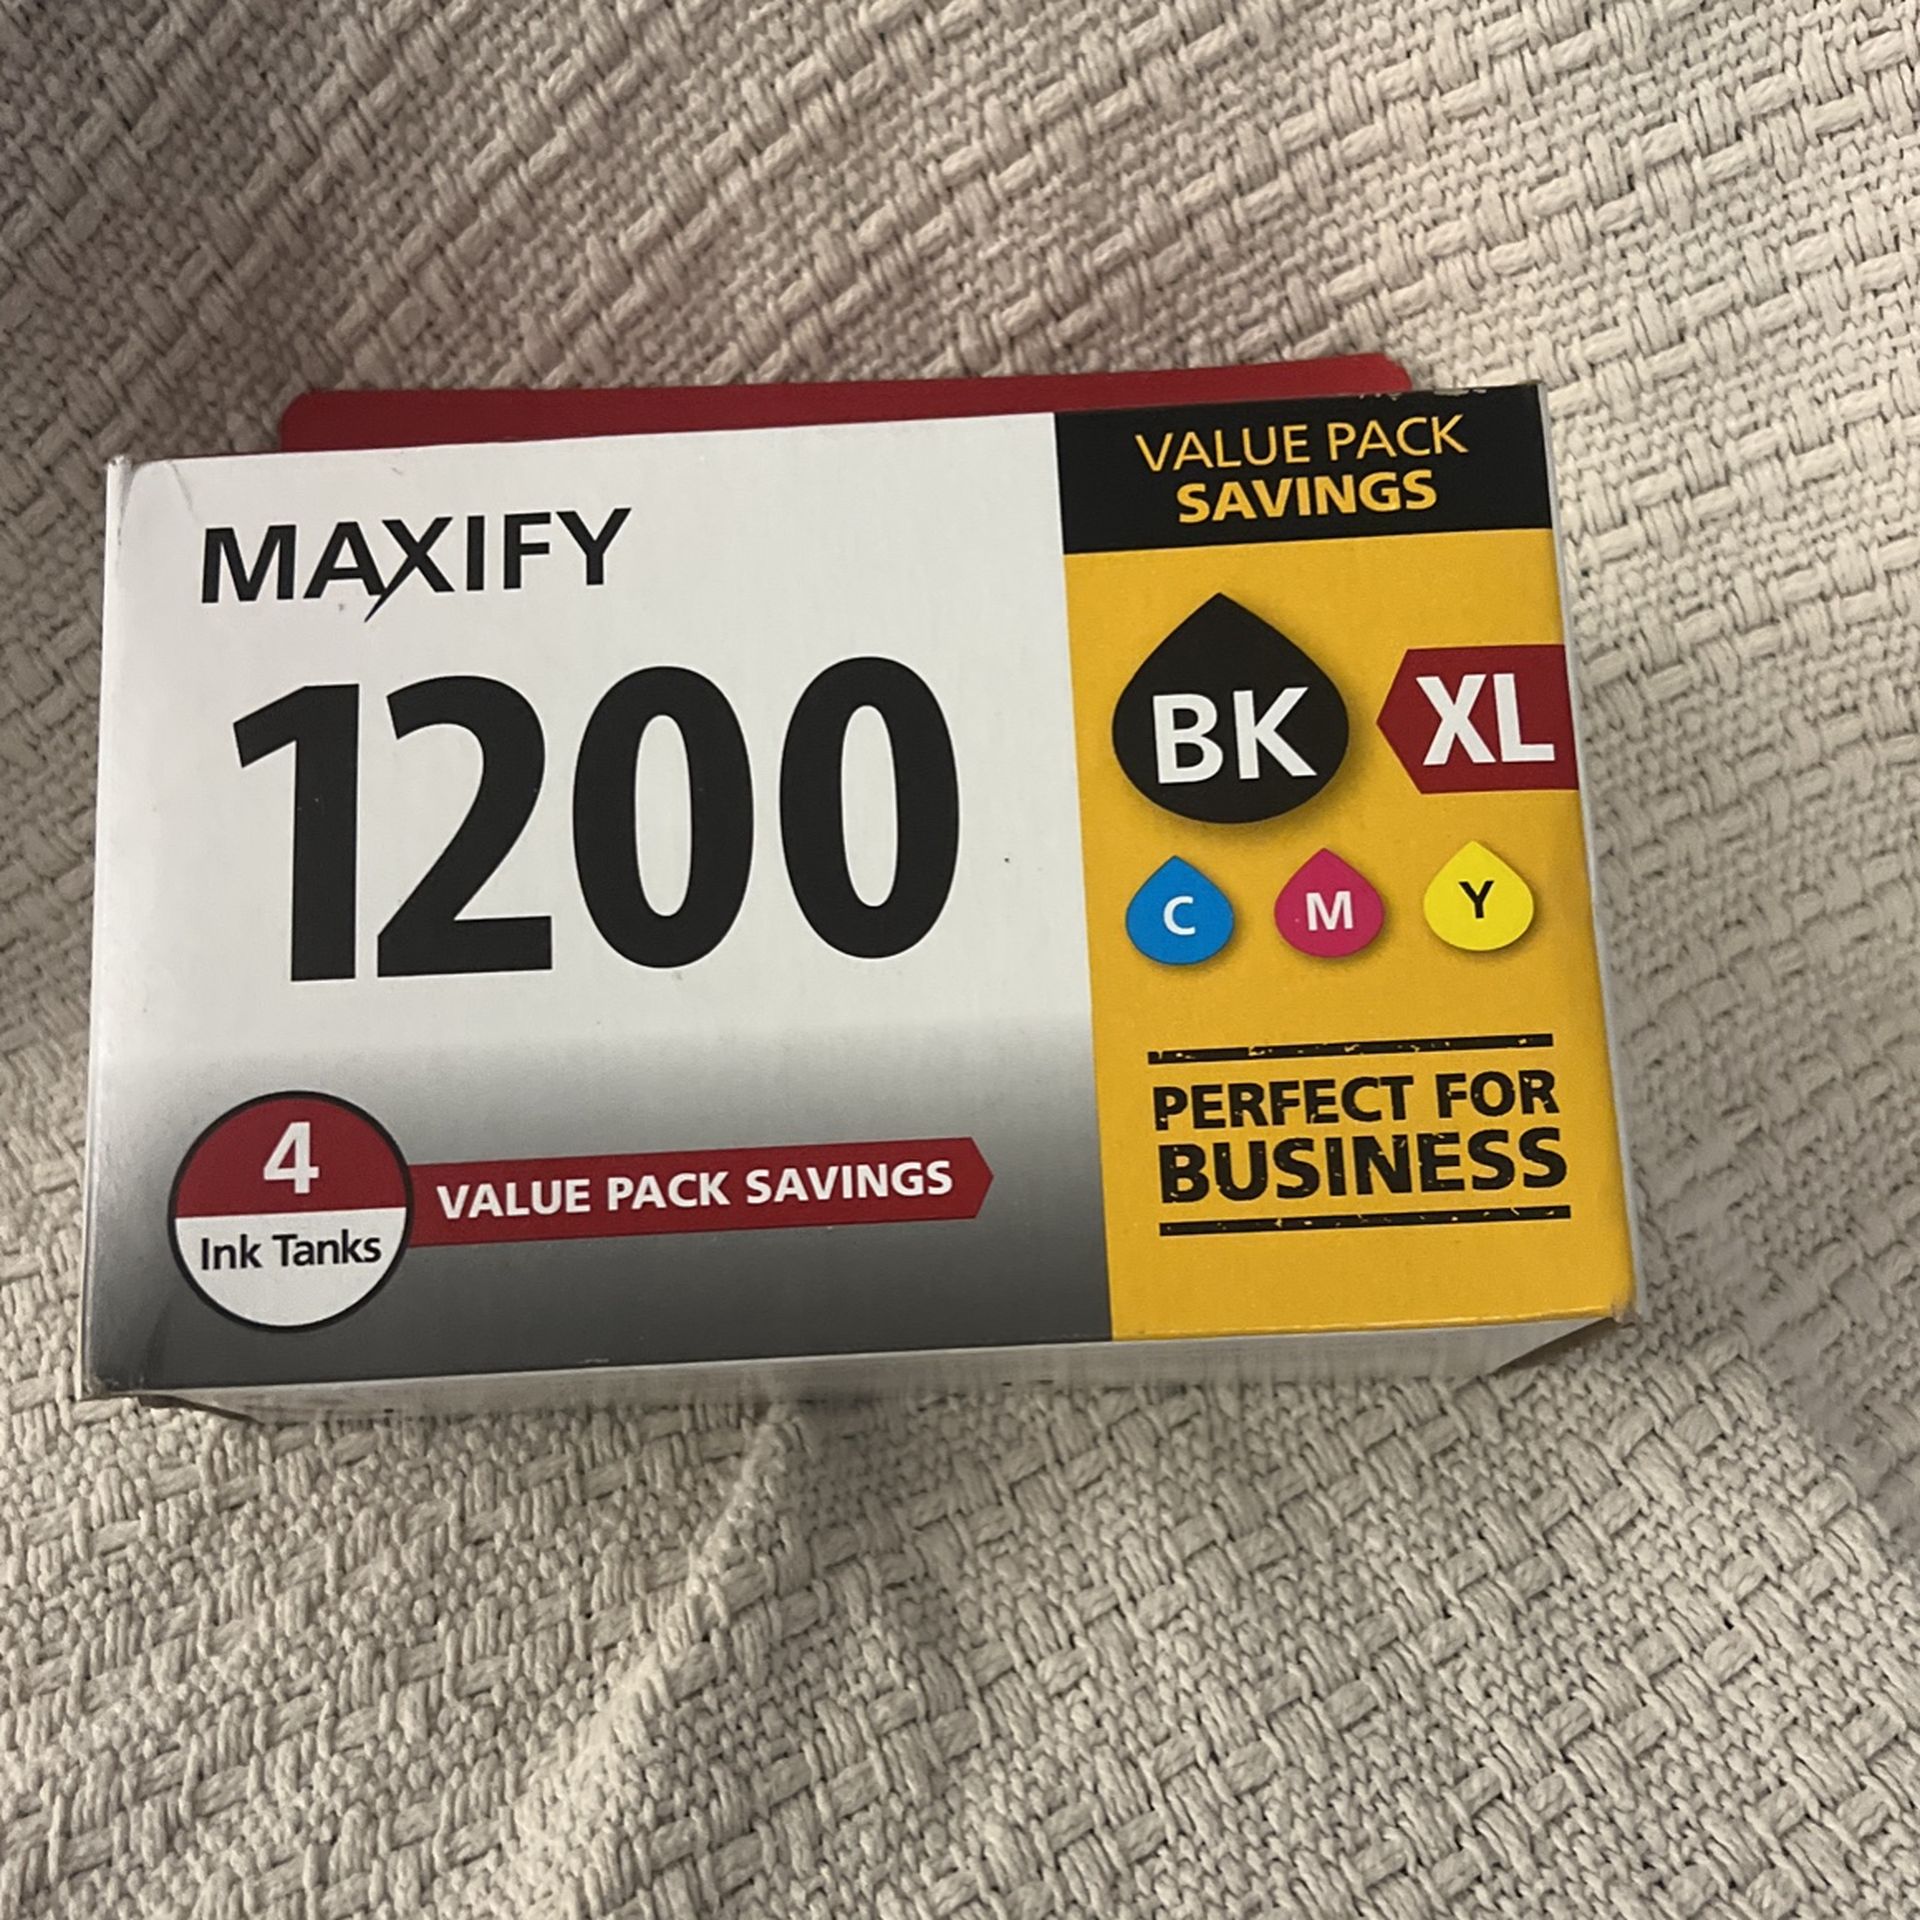 Maxify 1200 Printer Ink